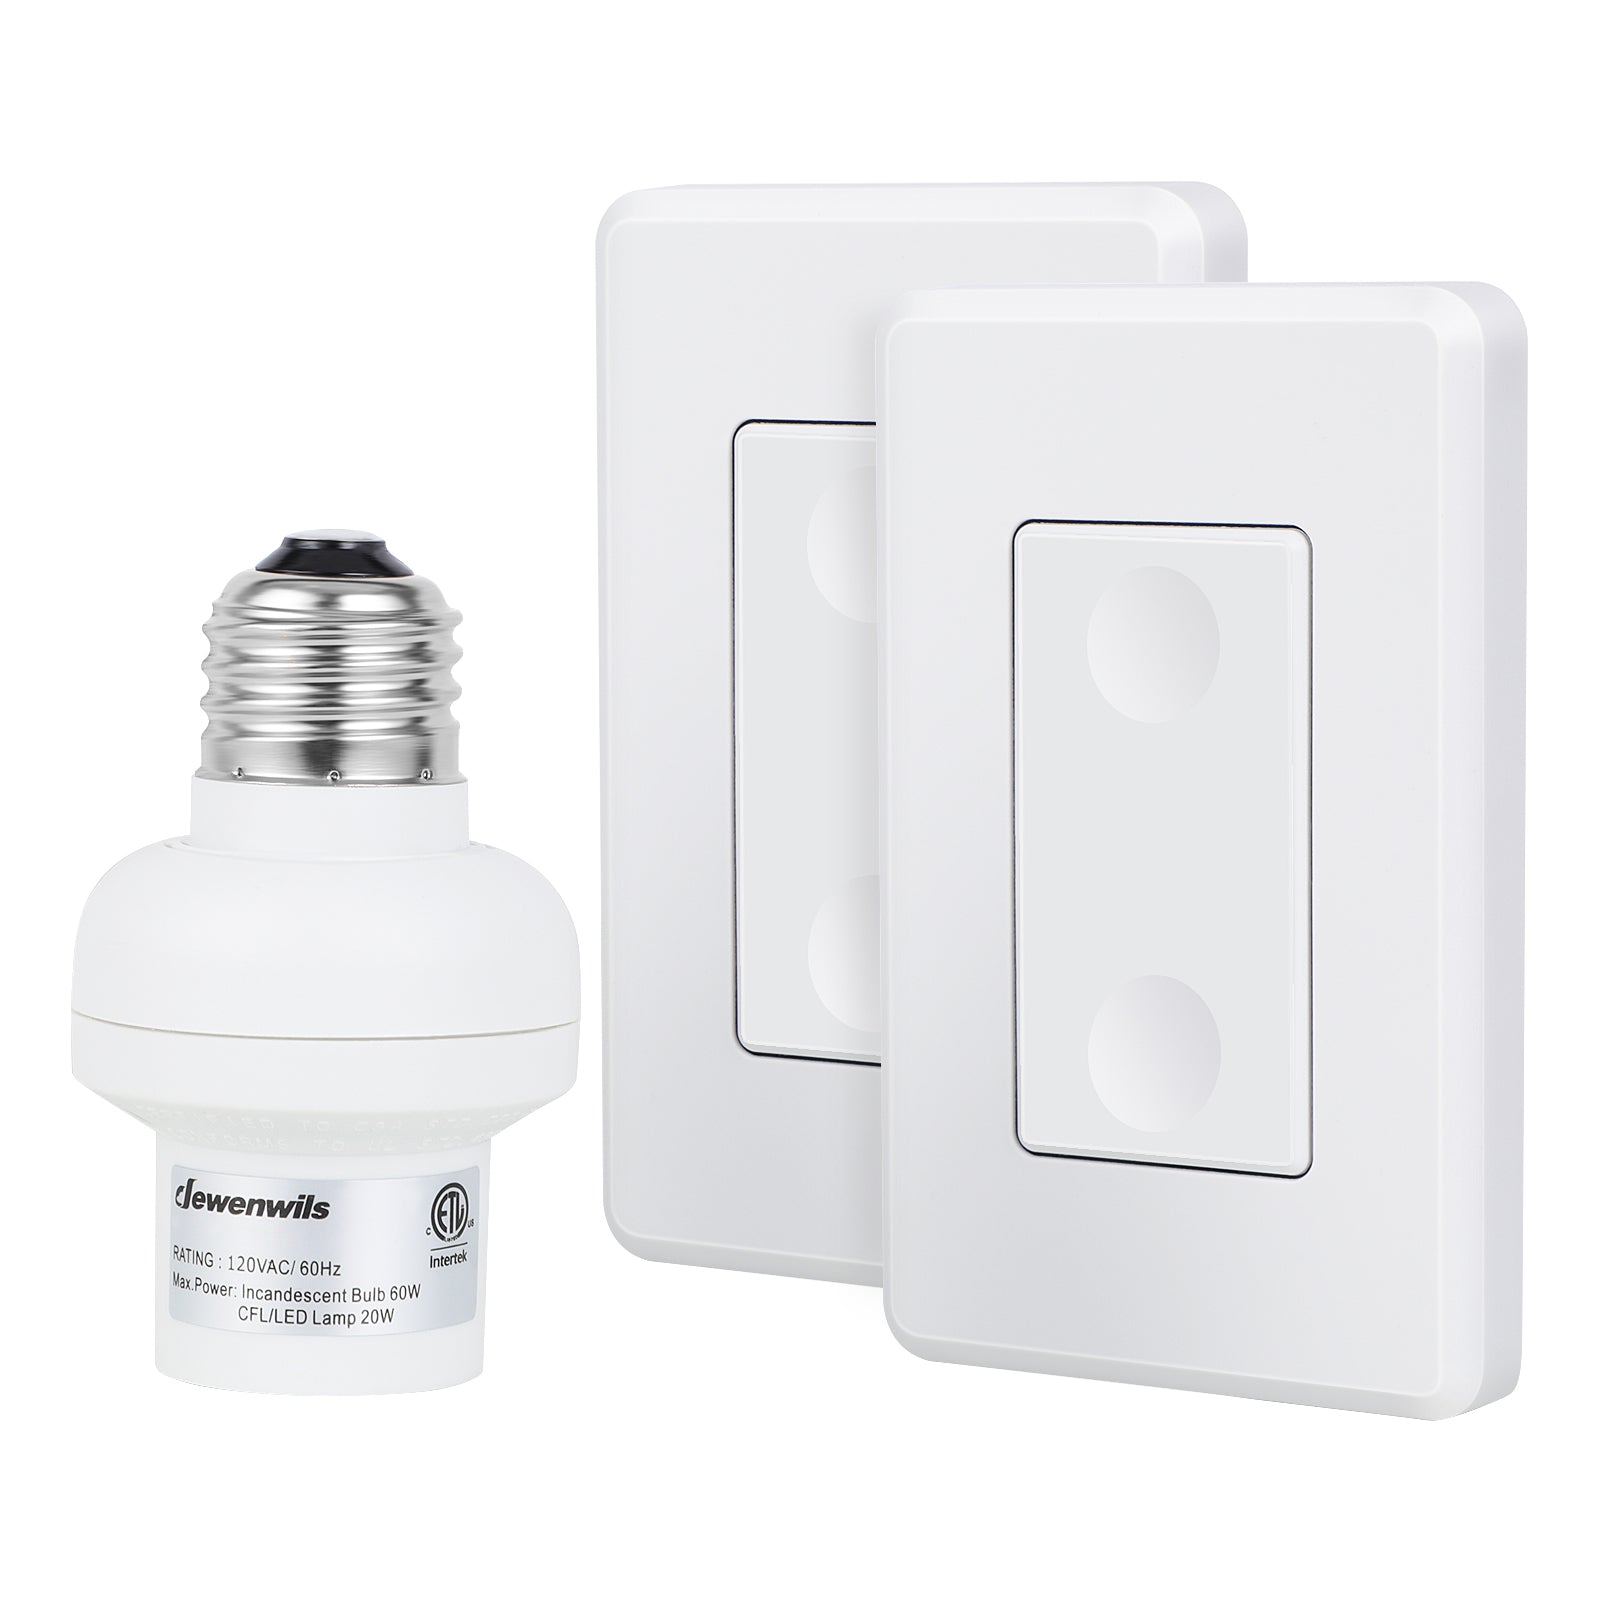 Wireless Remote Control E27 Light Socket Lamp Holder Set 20M Range Remote  Control On/Off Switch For E27 Smart Device Light Bulb